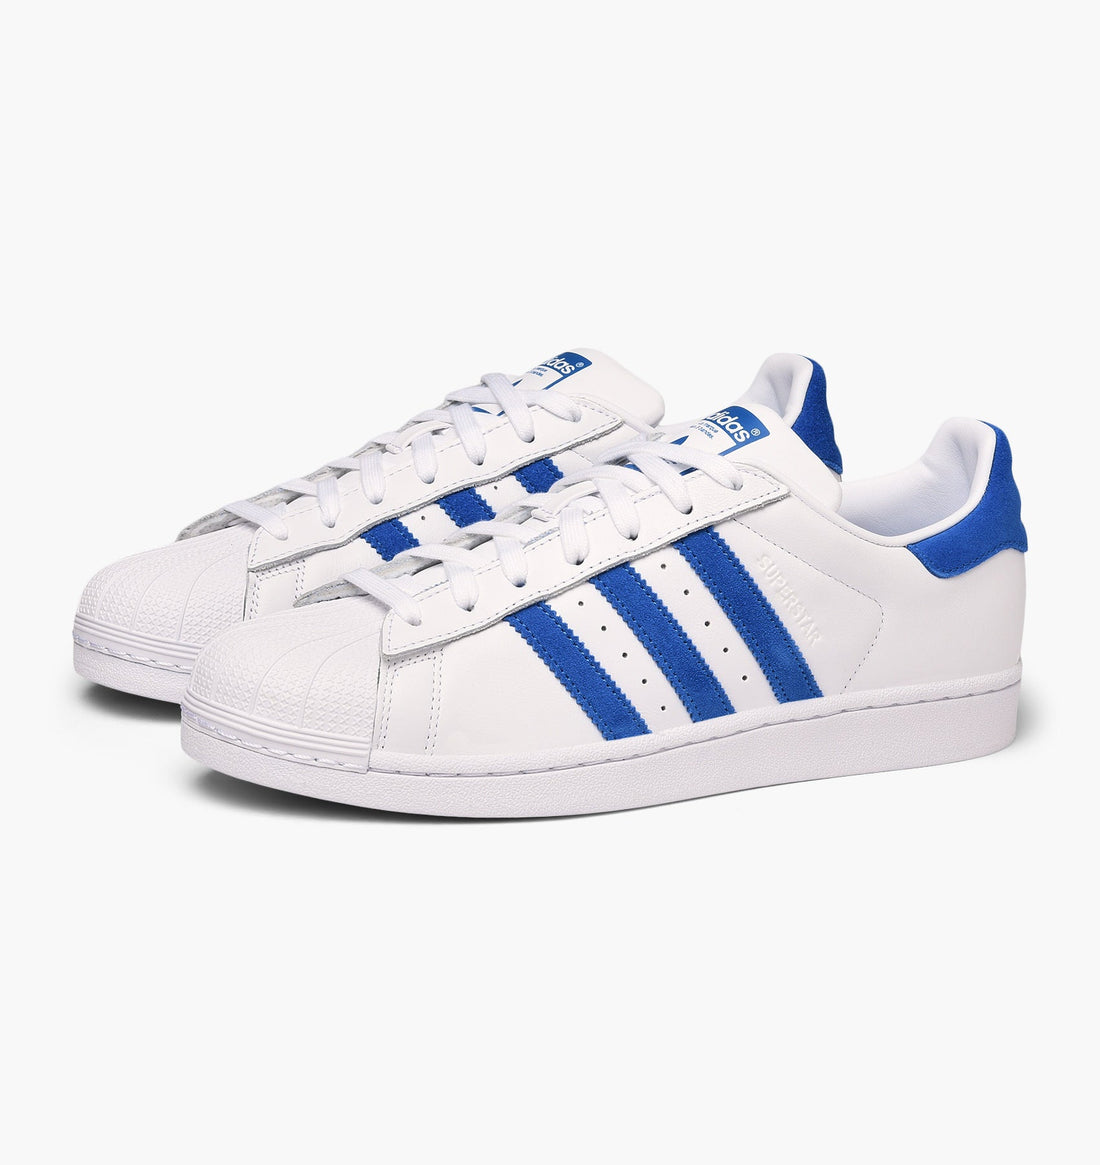 Adidas Originals Superstar Cloud White/Blue Colorway EE4474 - Becauze